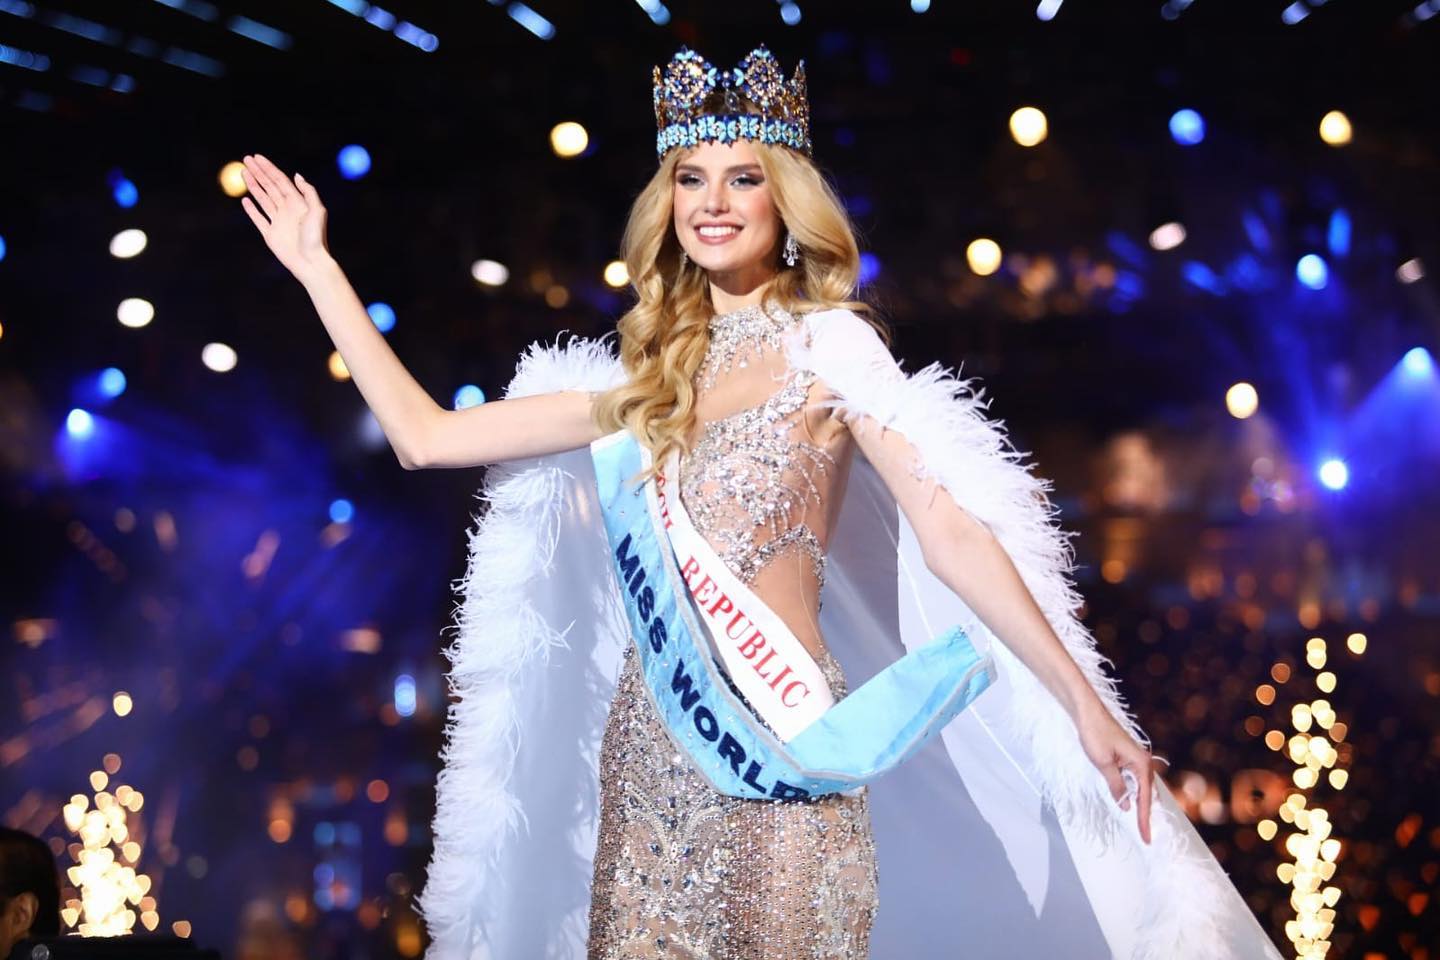 Krystyna Pyszková đăng quang Miss World. Ảnh: Facebook Miss World